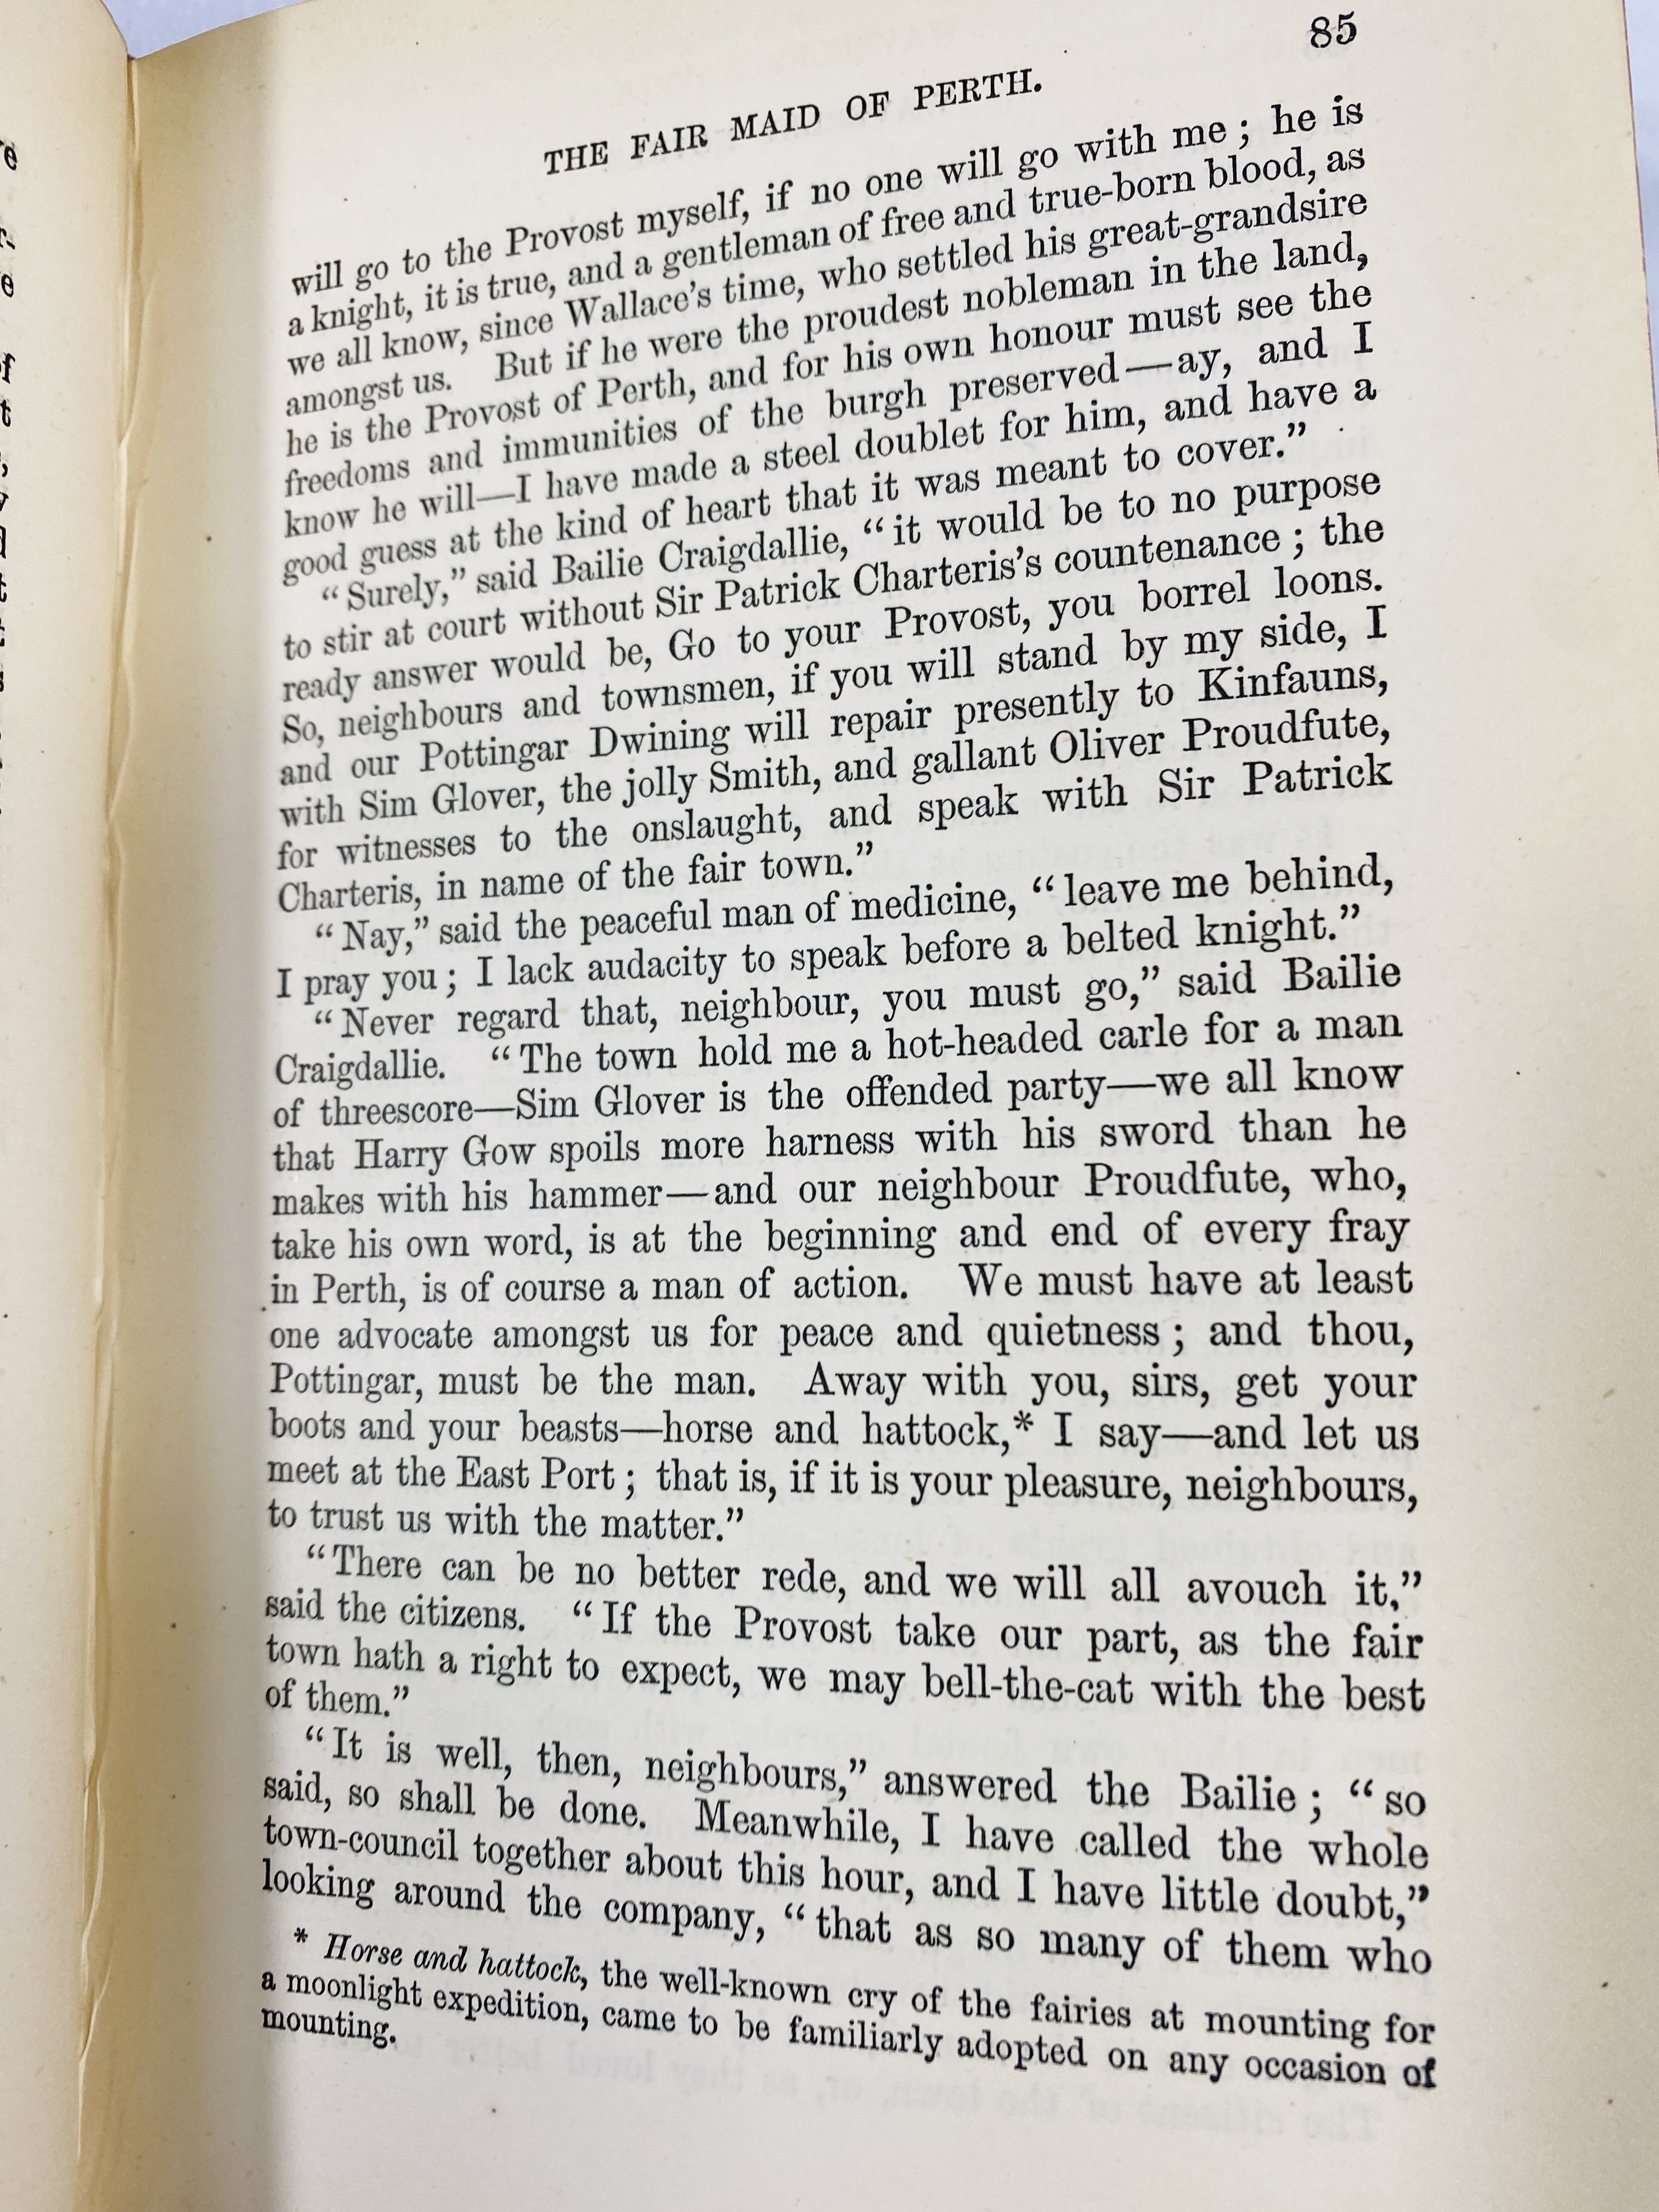 Waverley Novels, 1871 - Image 10 of 11